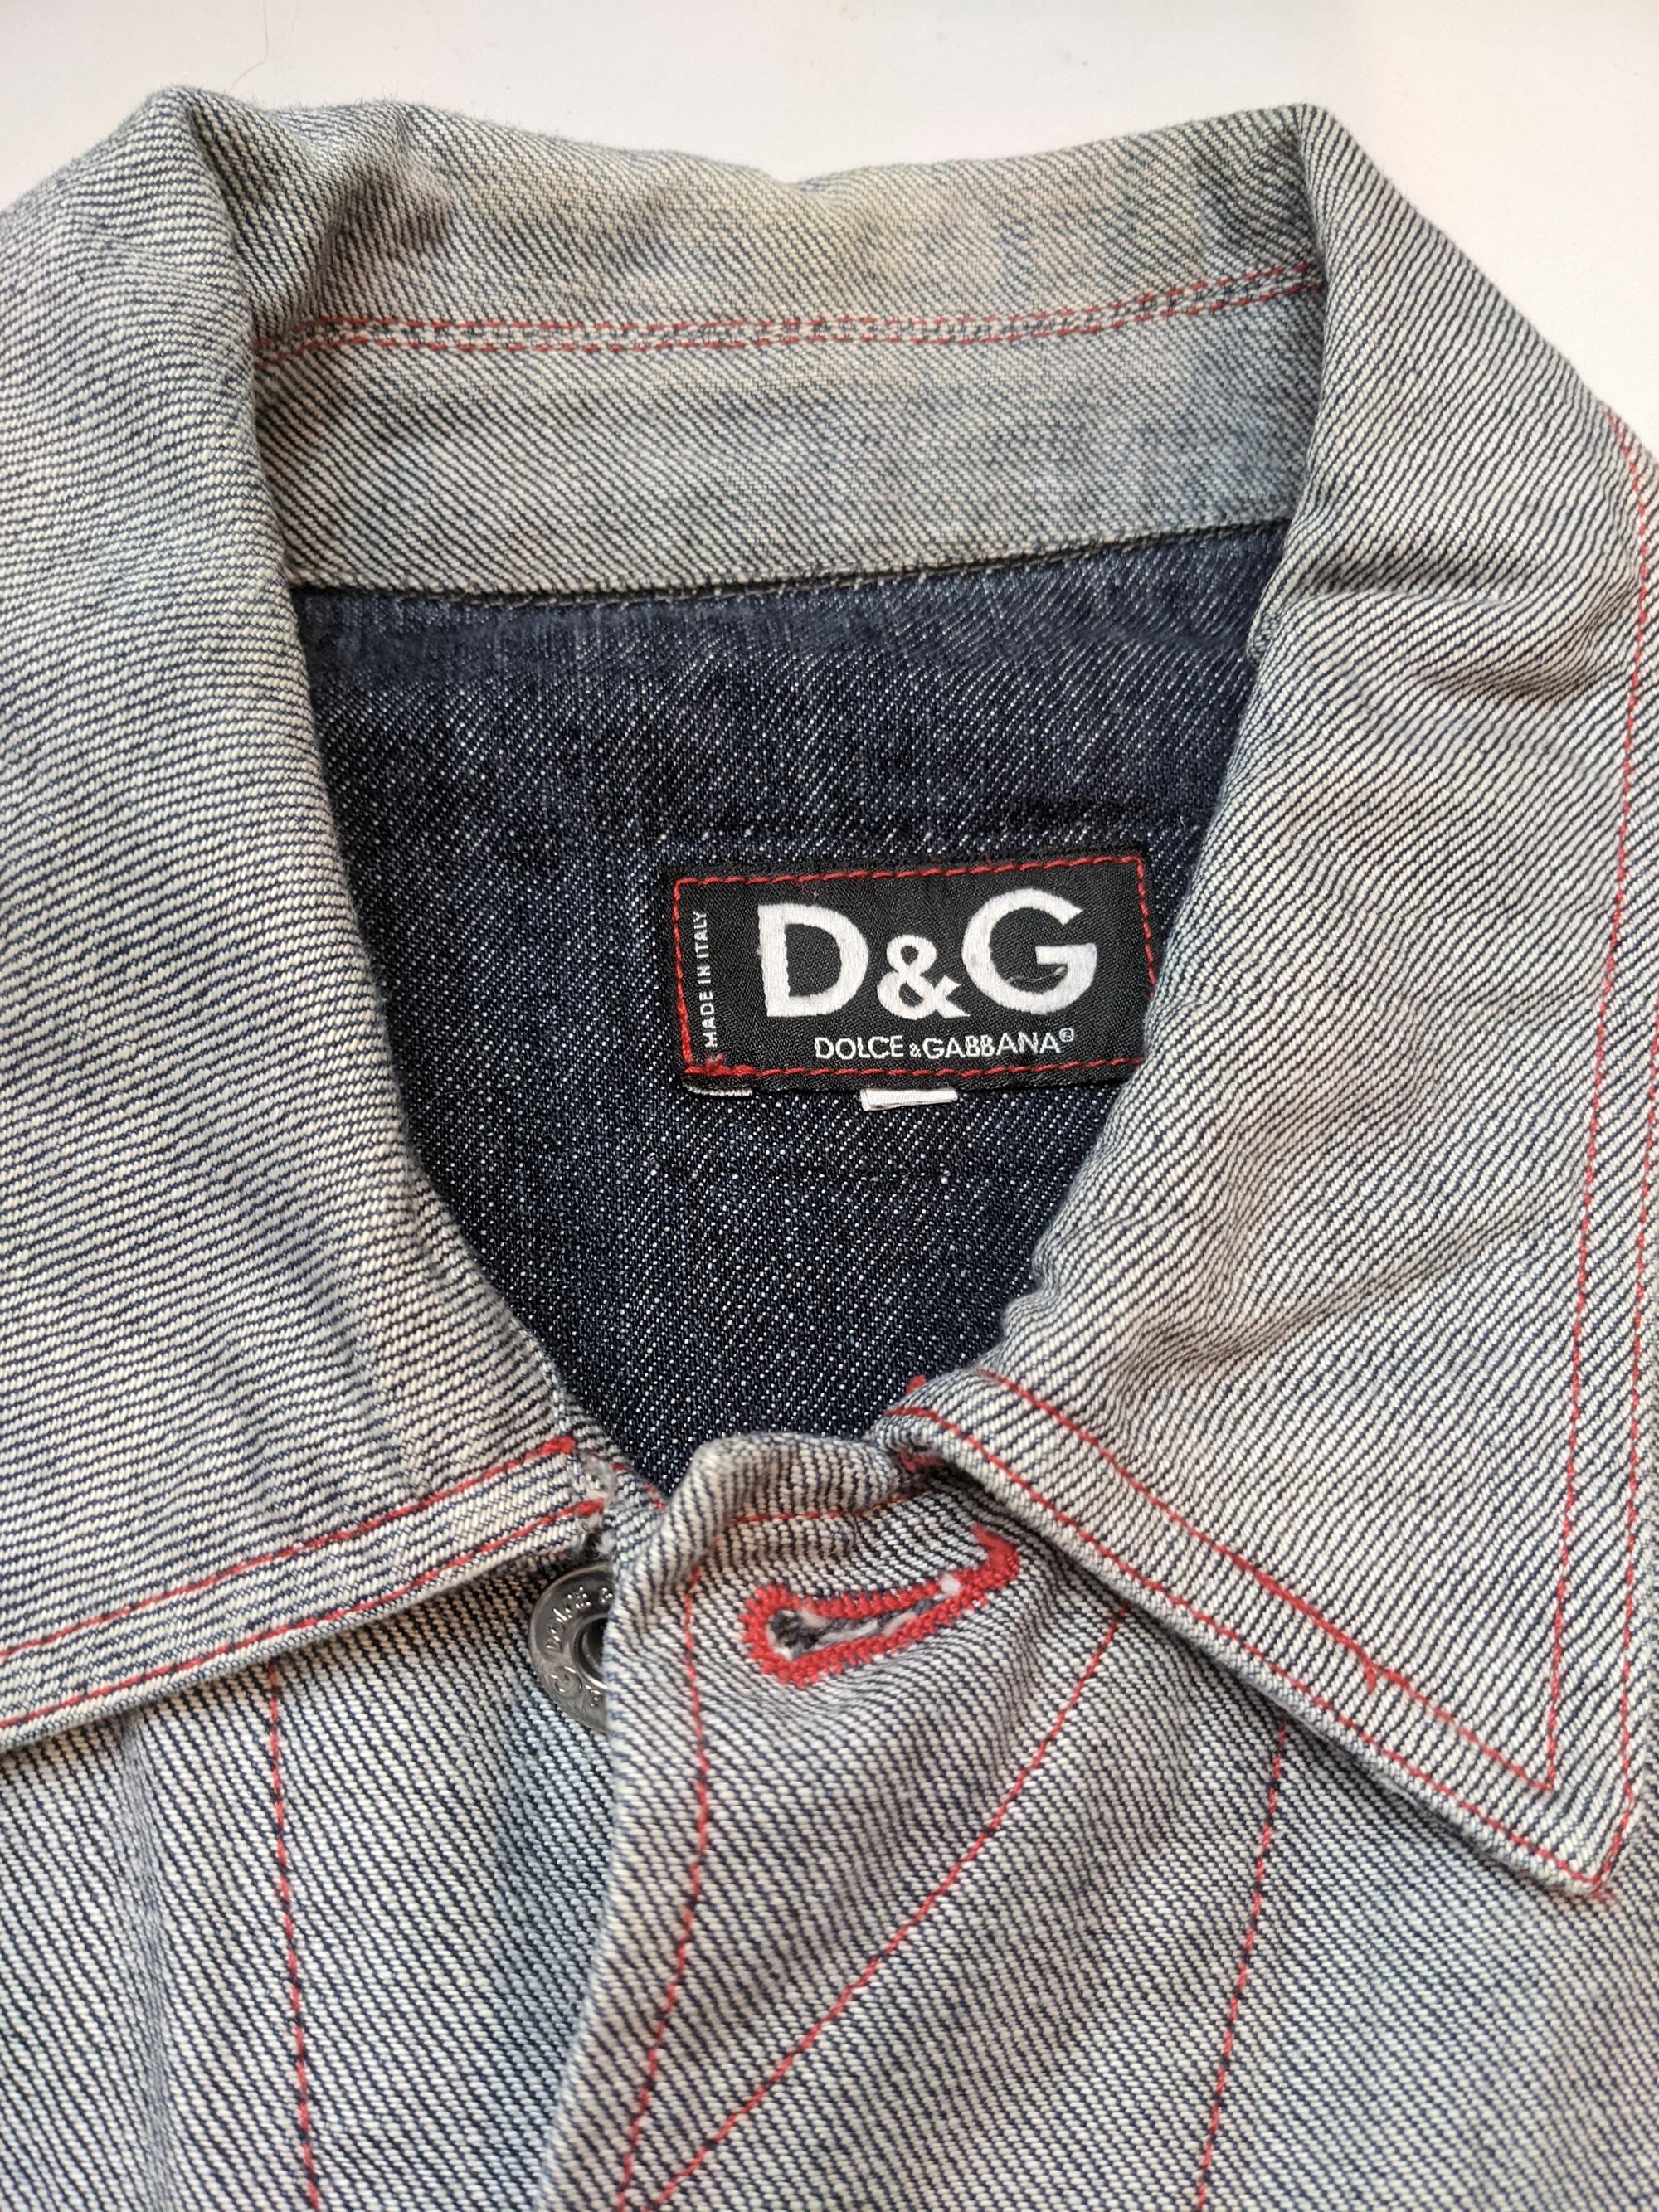 Dolce & Gabbana Mens Vintage D&G Two Tone Dark Denim Jean Jacket For Sale 1